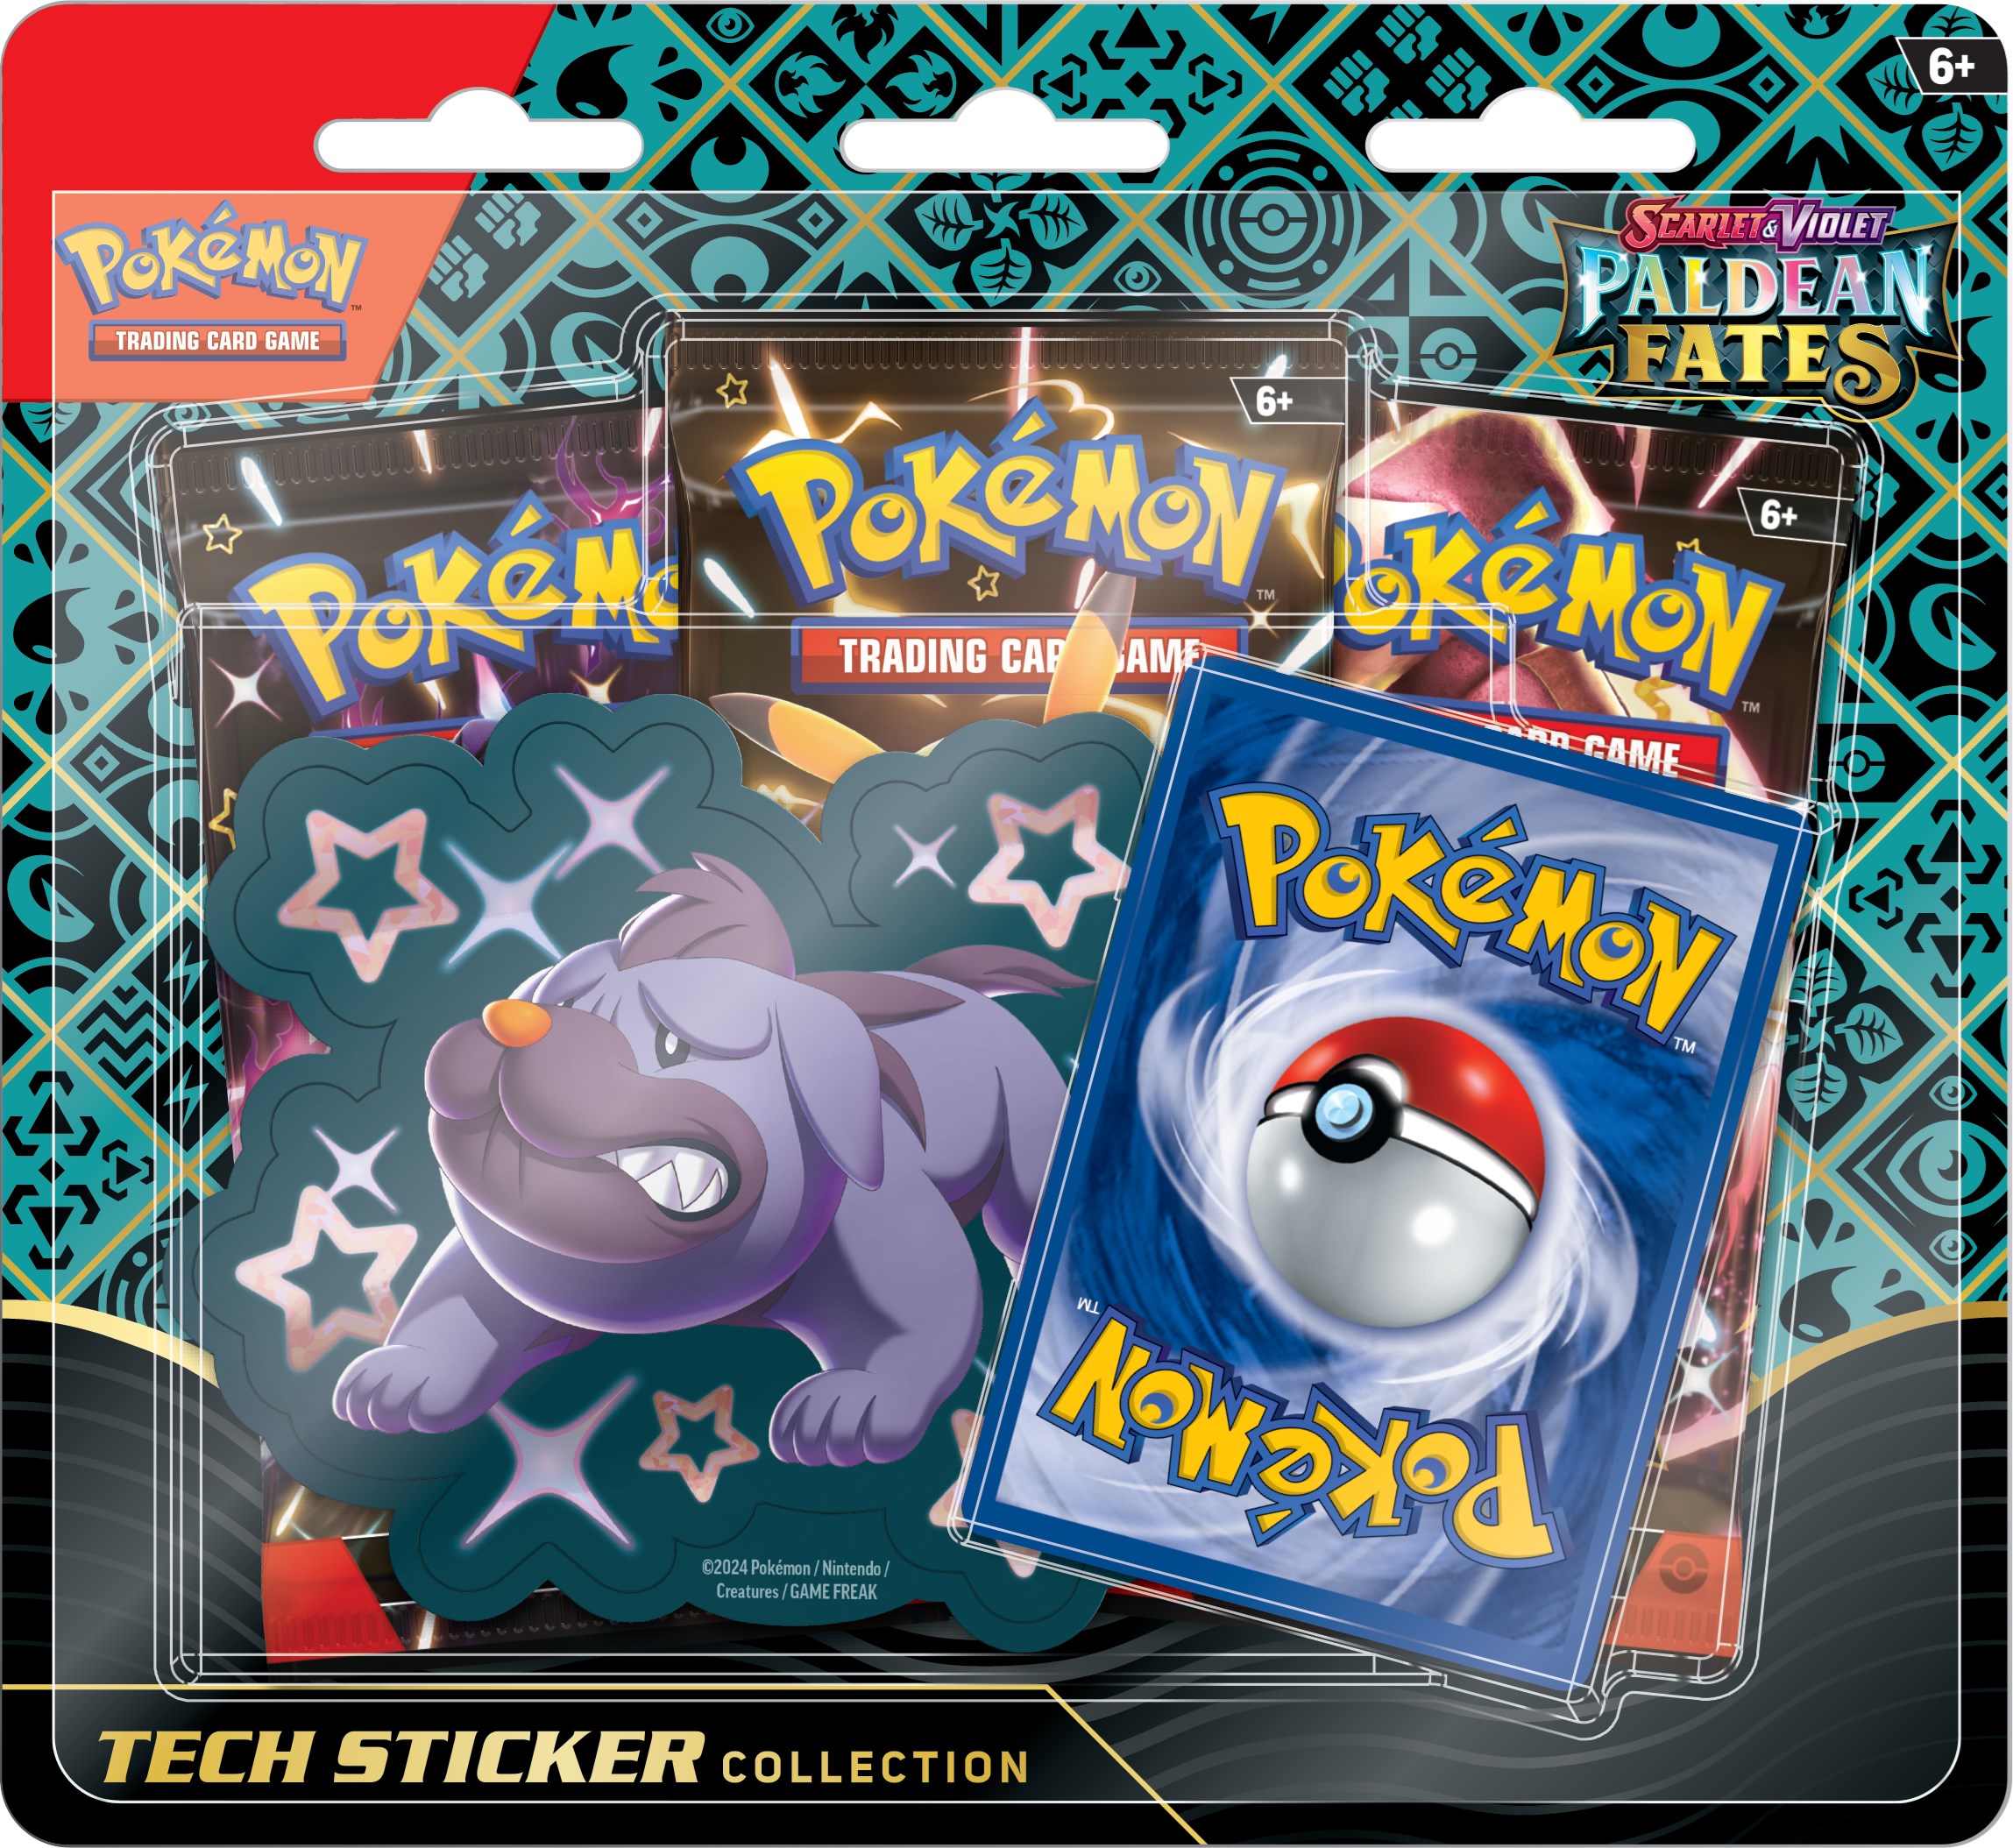 Pokemon TCG Scarlet Violet%E2%80%94Paldean Fates Tech Sticker Collection Maschiff png jpgcopy